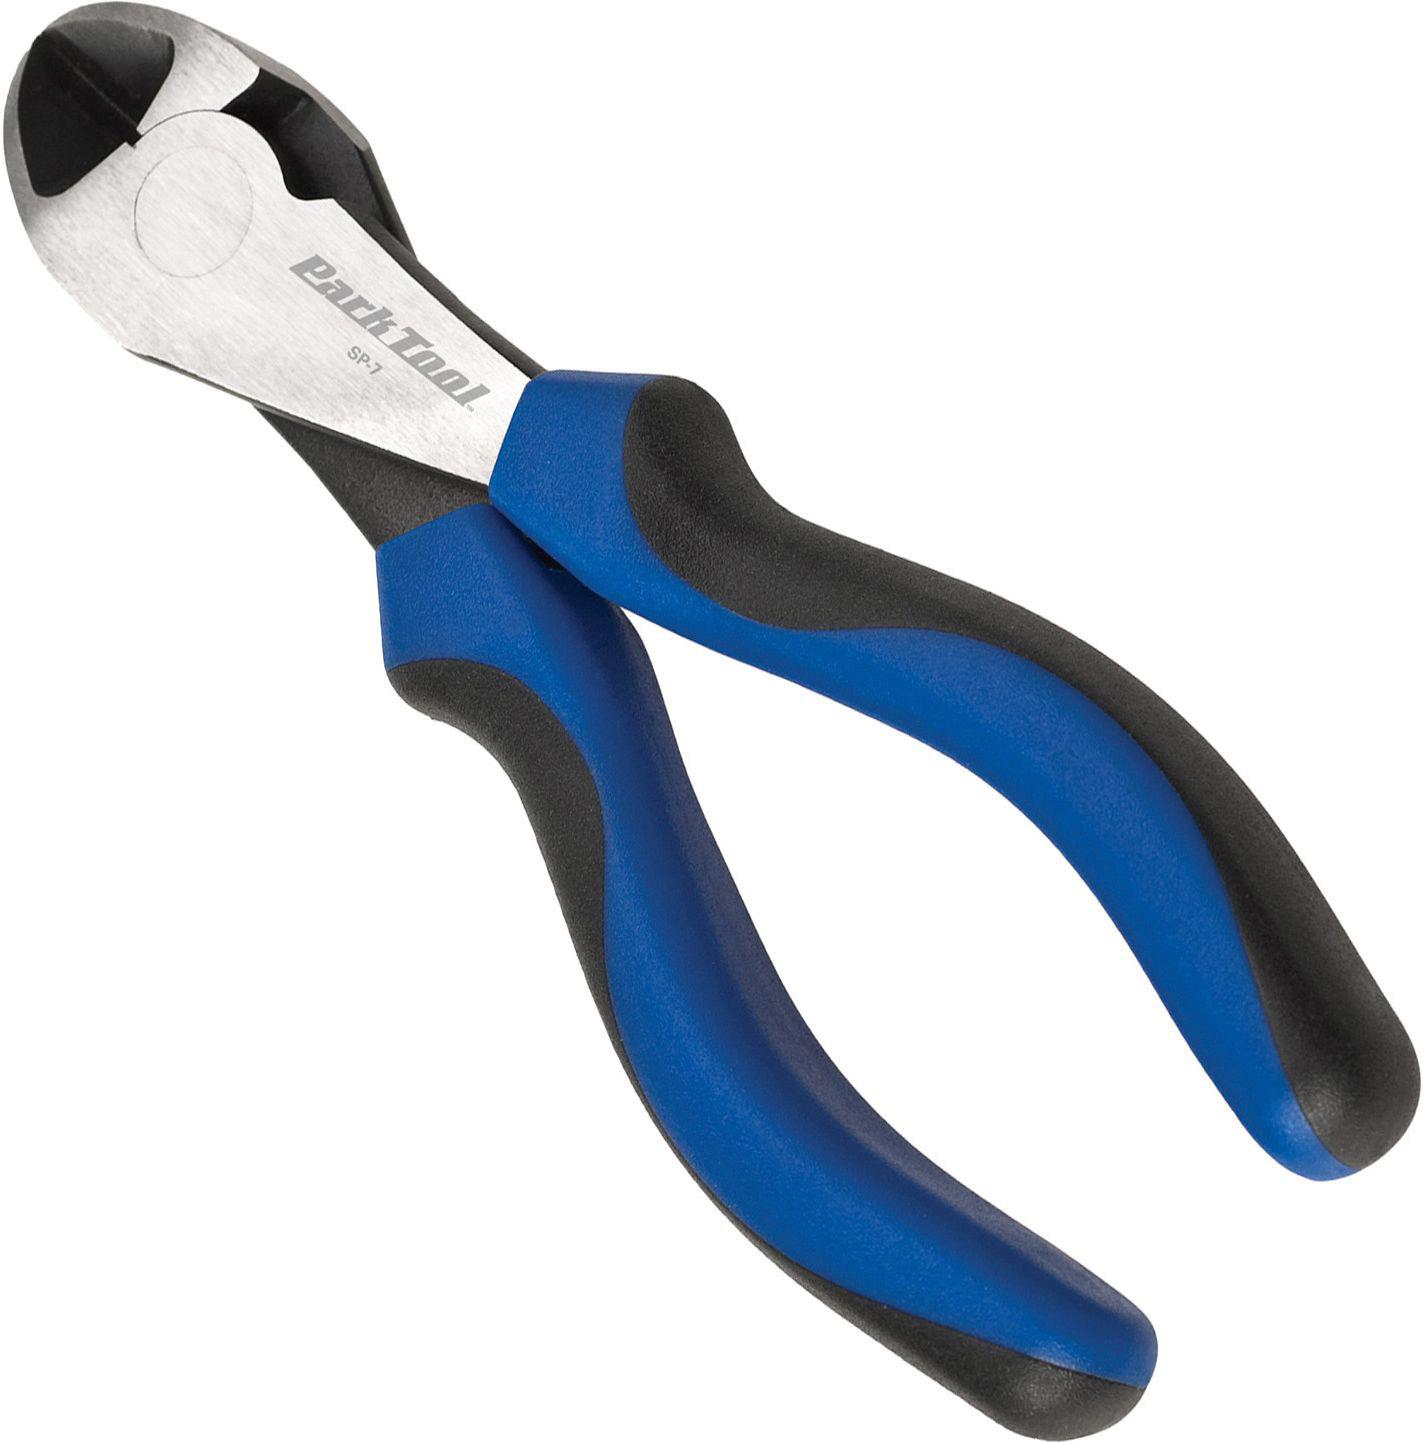 Park Tool Side Cutter Pliers (sp-7)  Blue/black